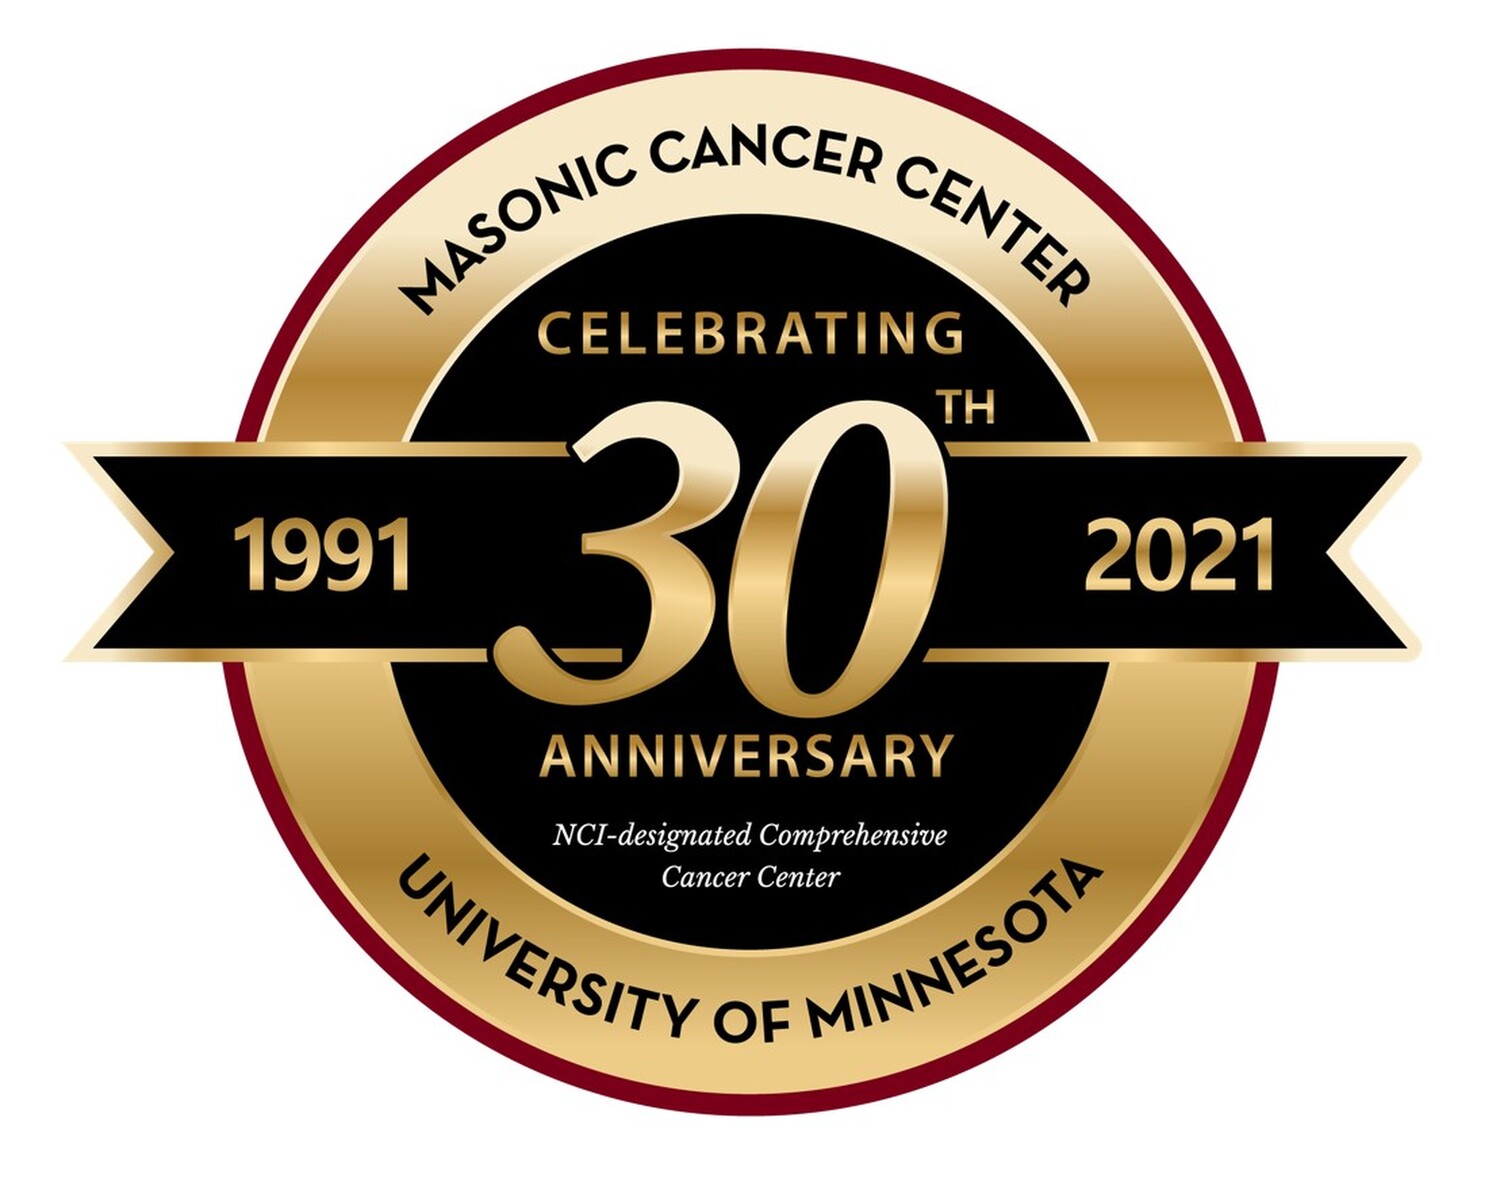 Masonic Cancer Center's 30th anniversary logo - 1991-2021